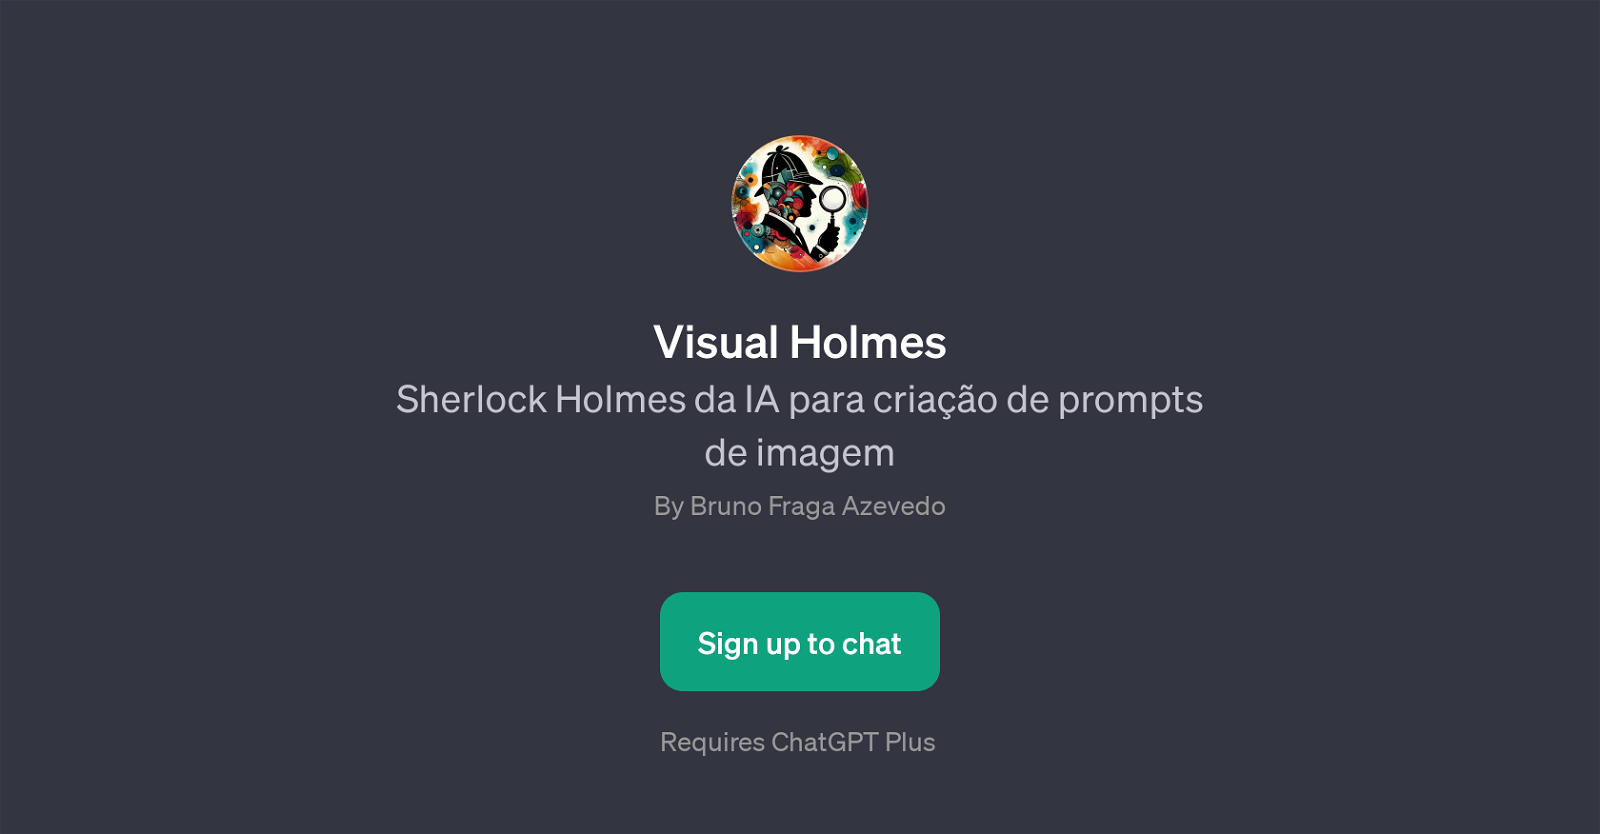 Visual Holmes website